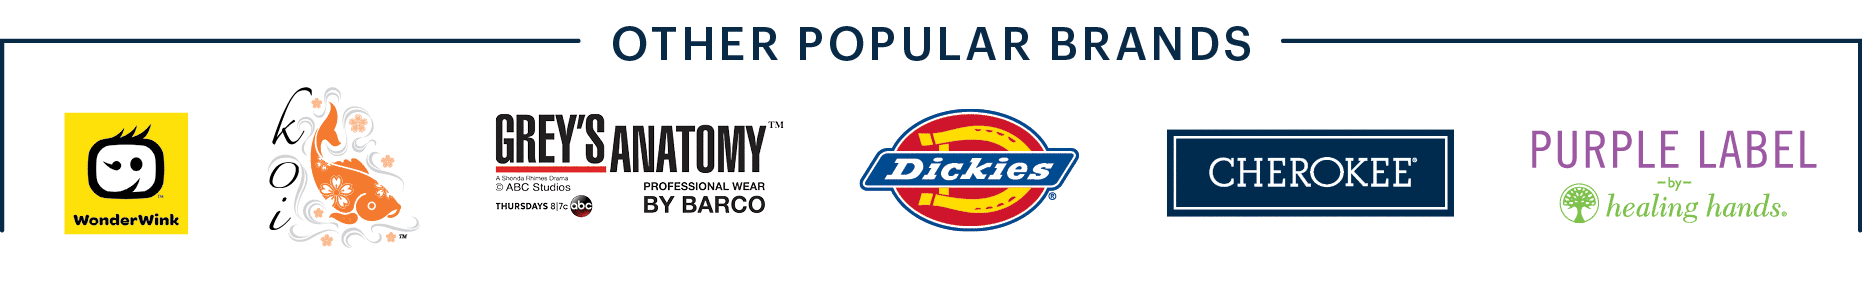 Other popular brands